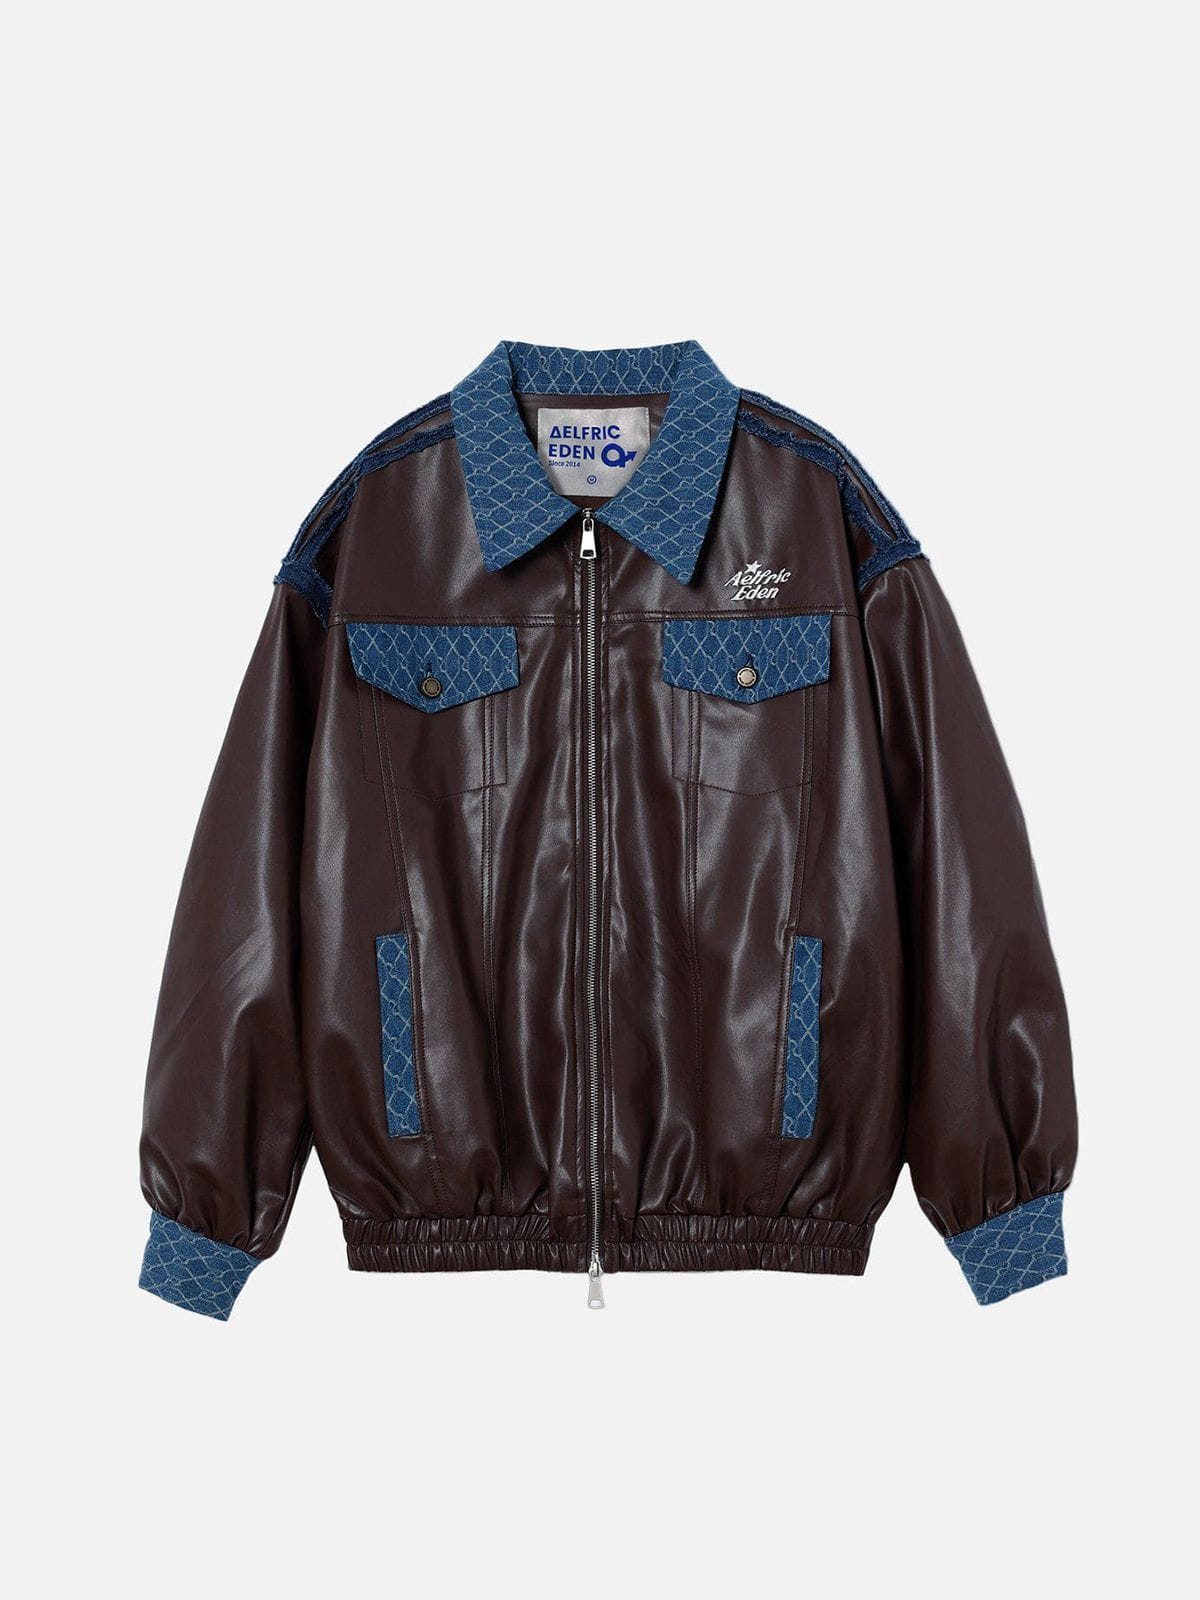 Aelfric Eden Denim Patchwork Jacquard Leather Jacket